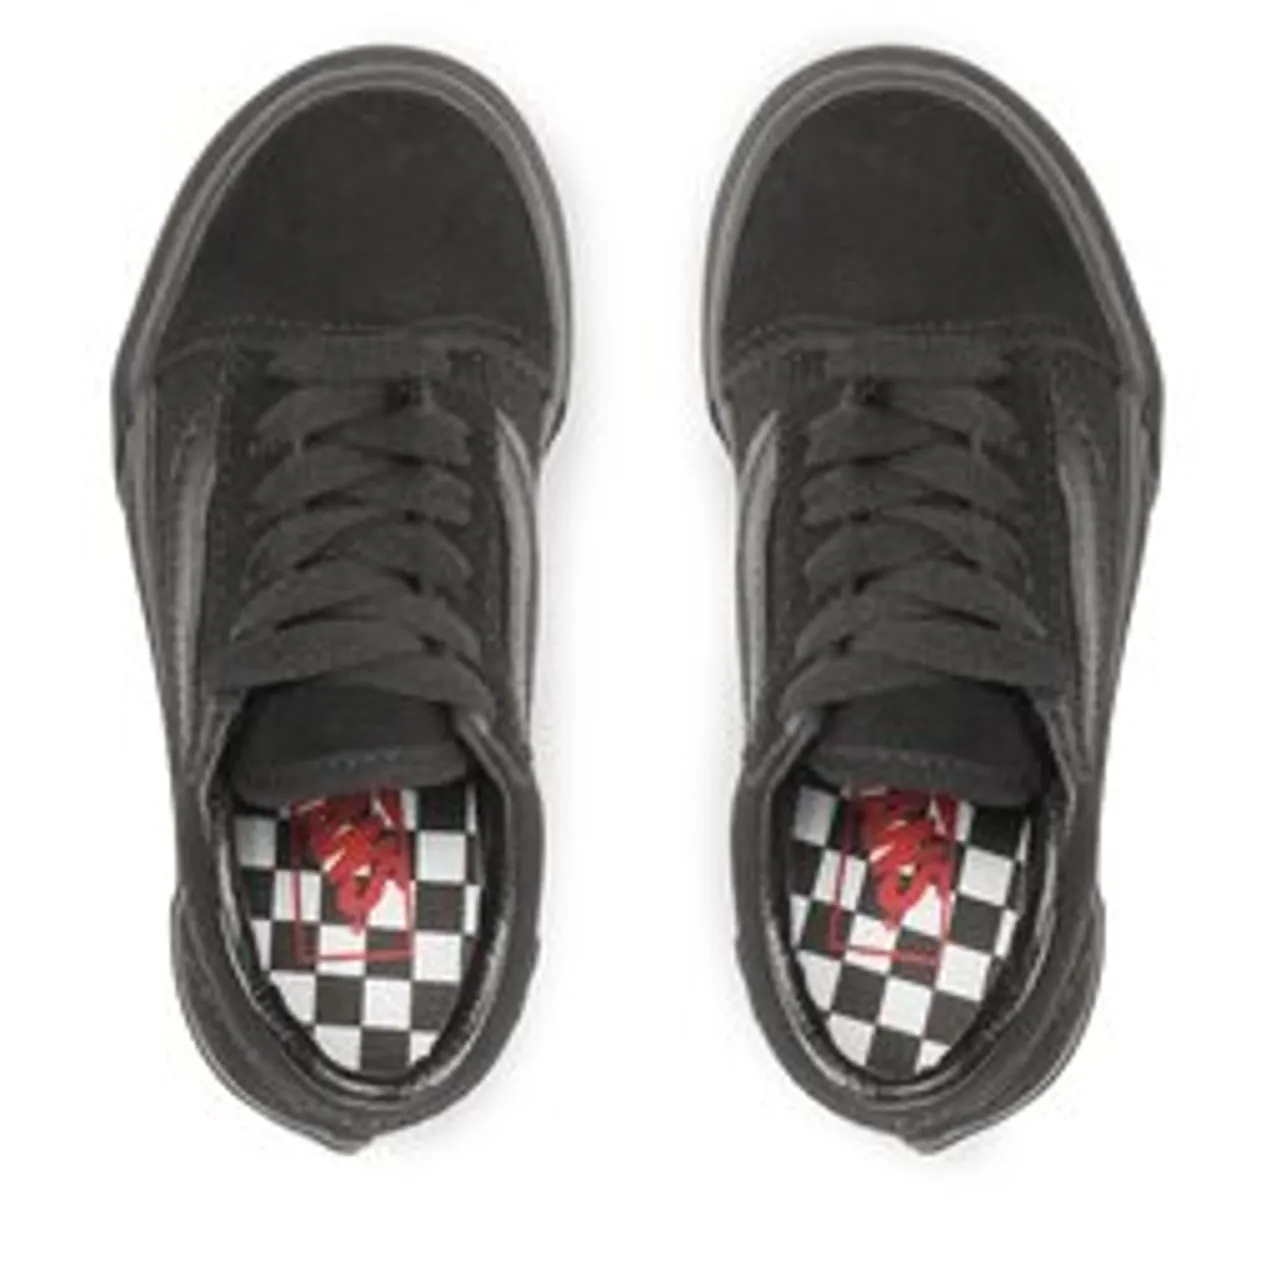 Sneakers aus Stoff Vans Old Skool VN0A38HBPQZ1 Black Mono